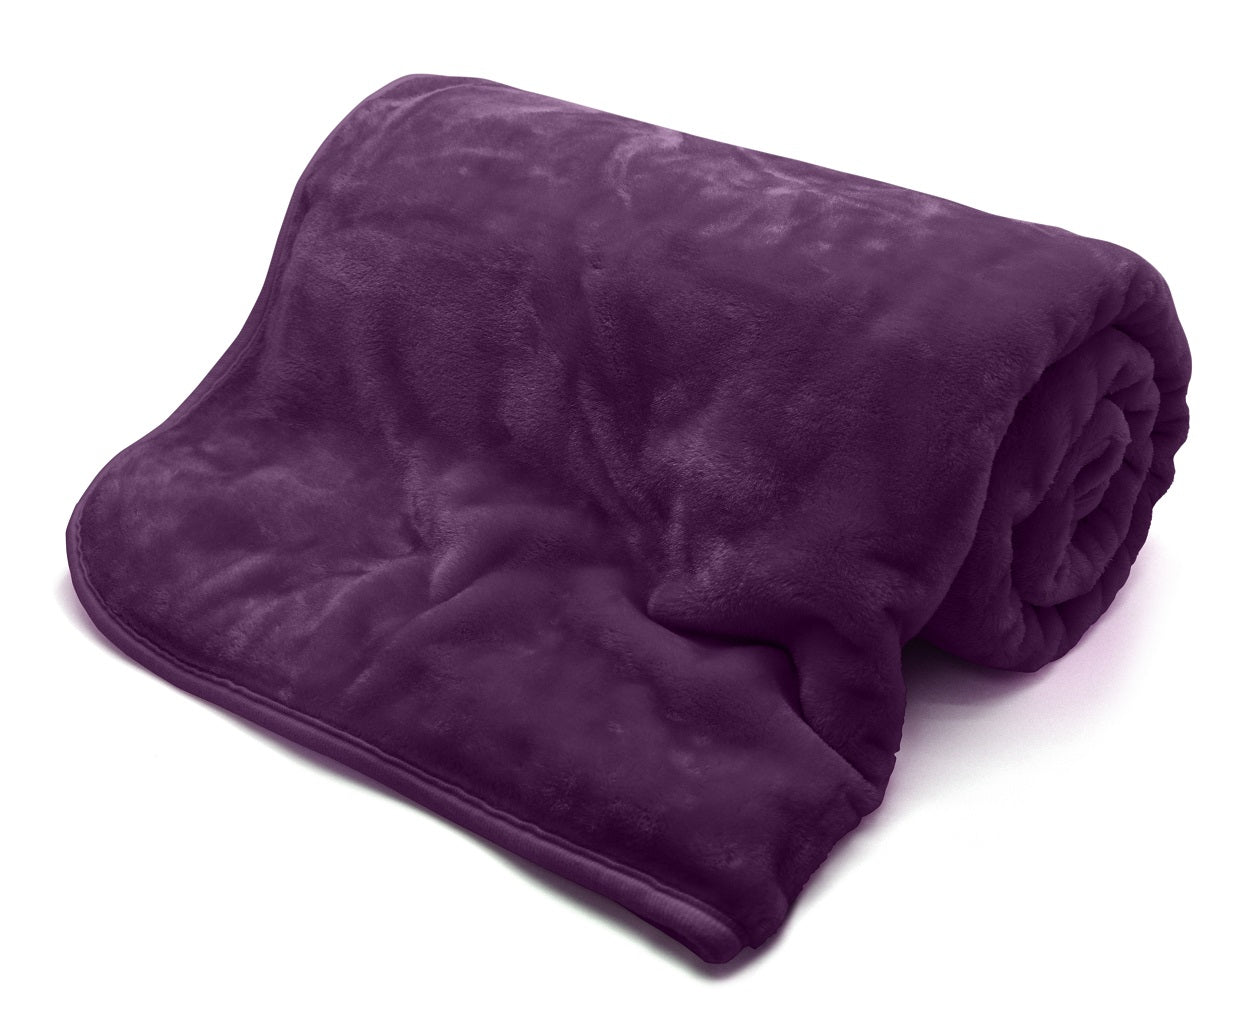 Luxury Faux Fur Throw Sofa Bed Mink Soft Warm Fleece Blanket OR Cushion Cover